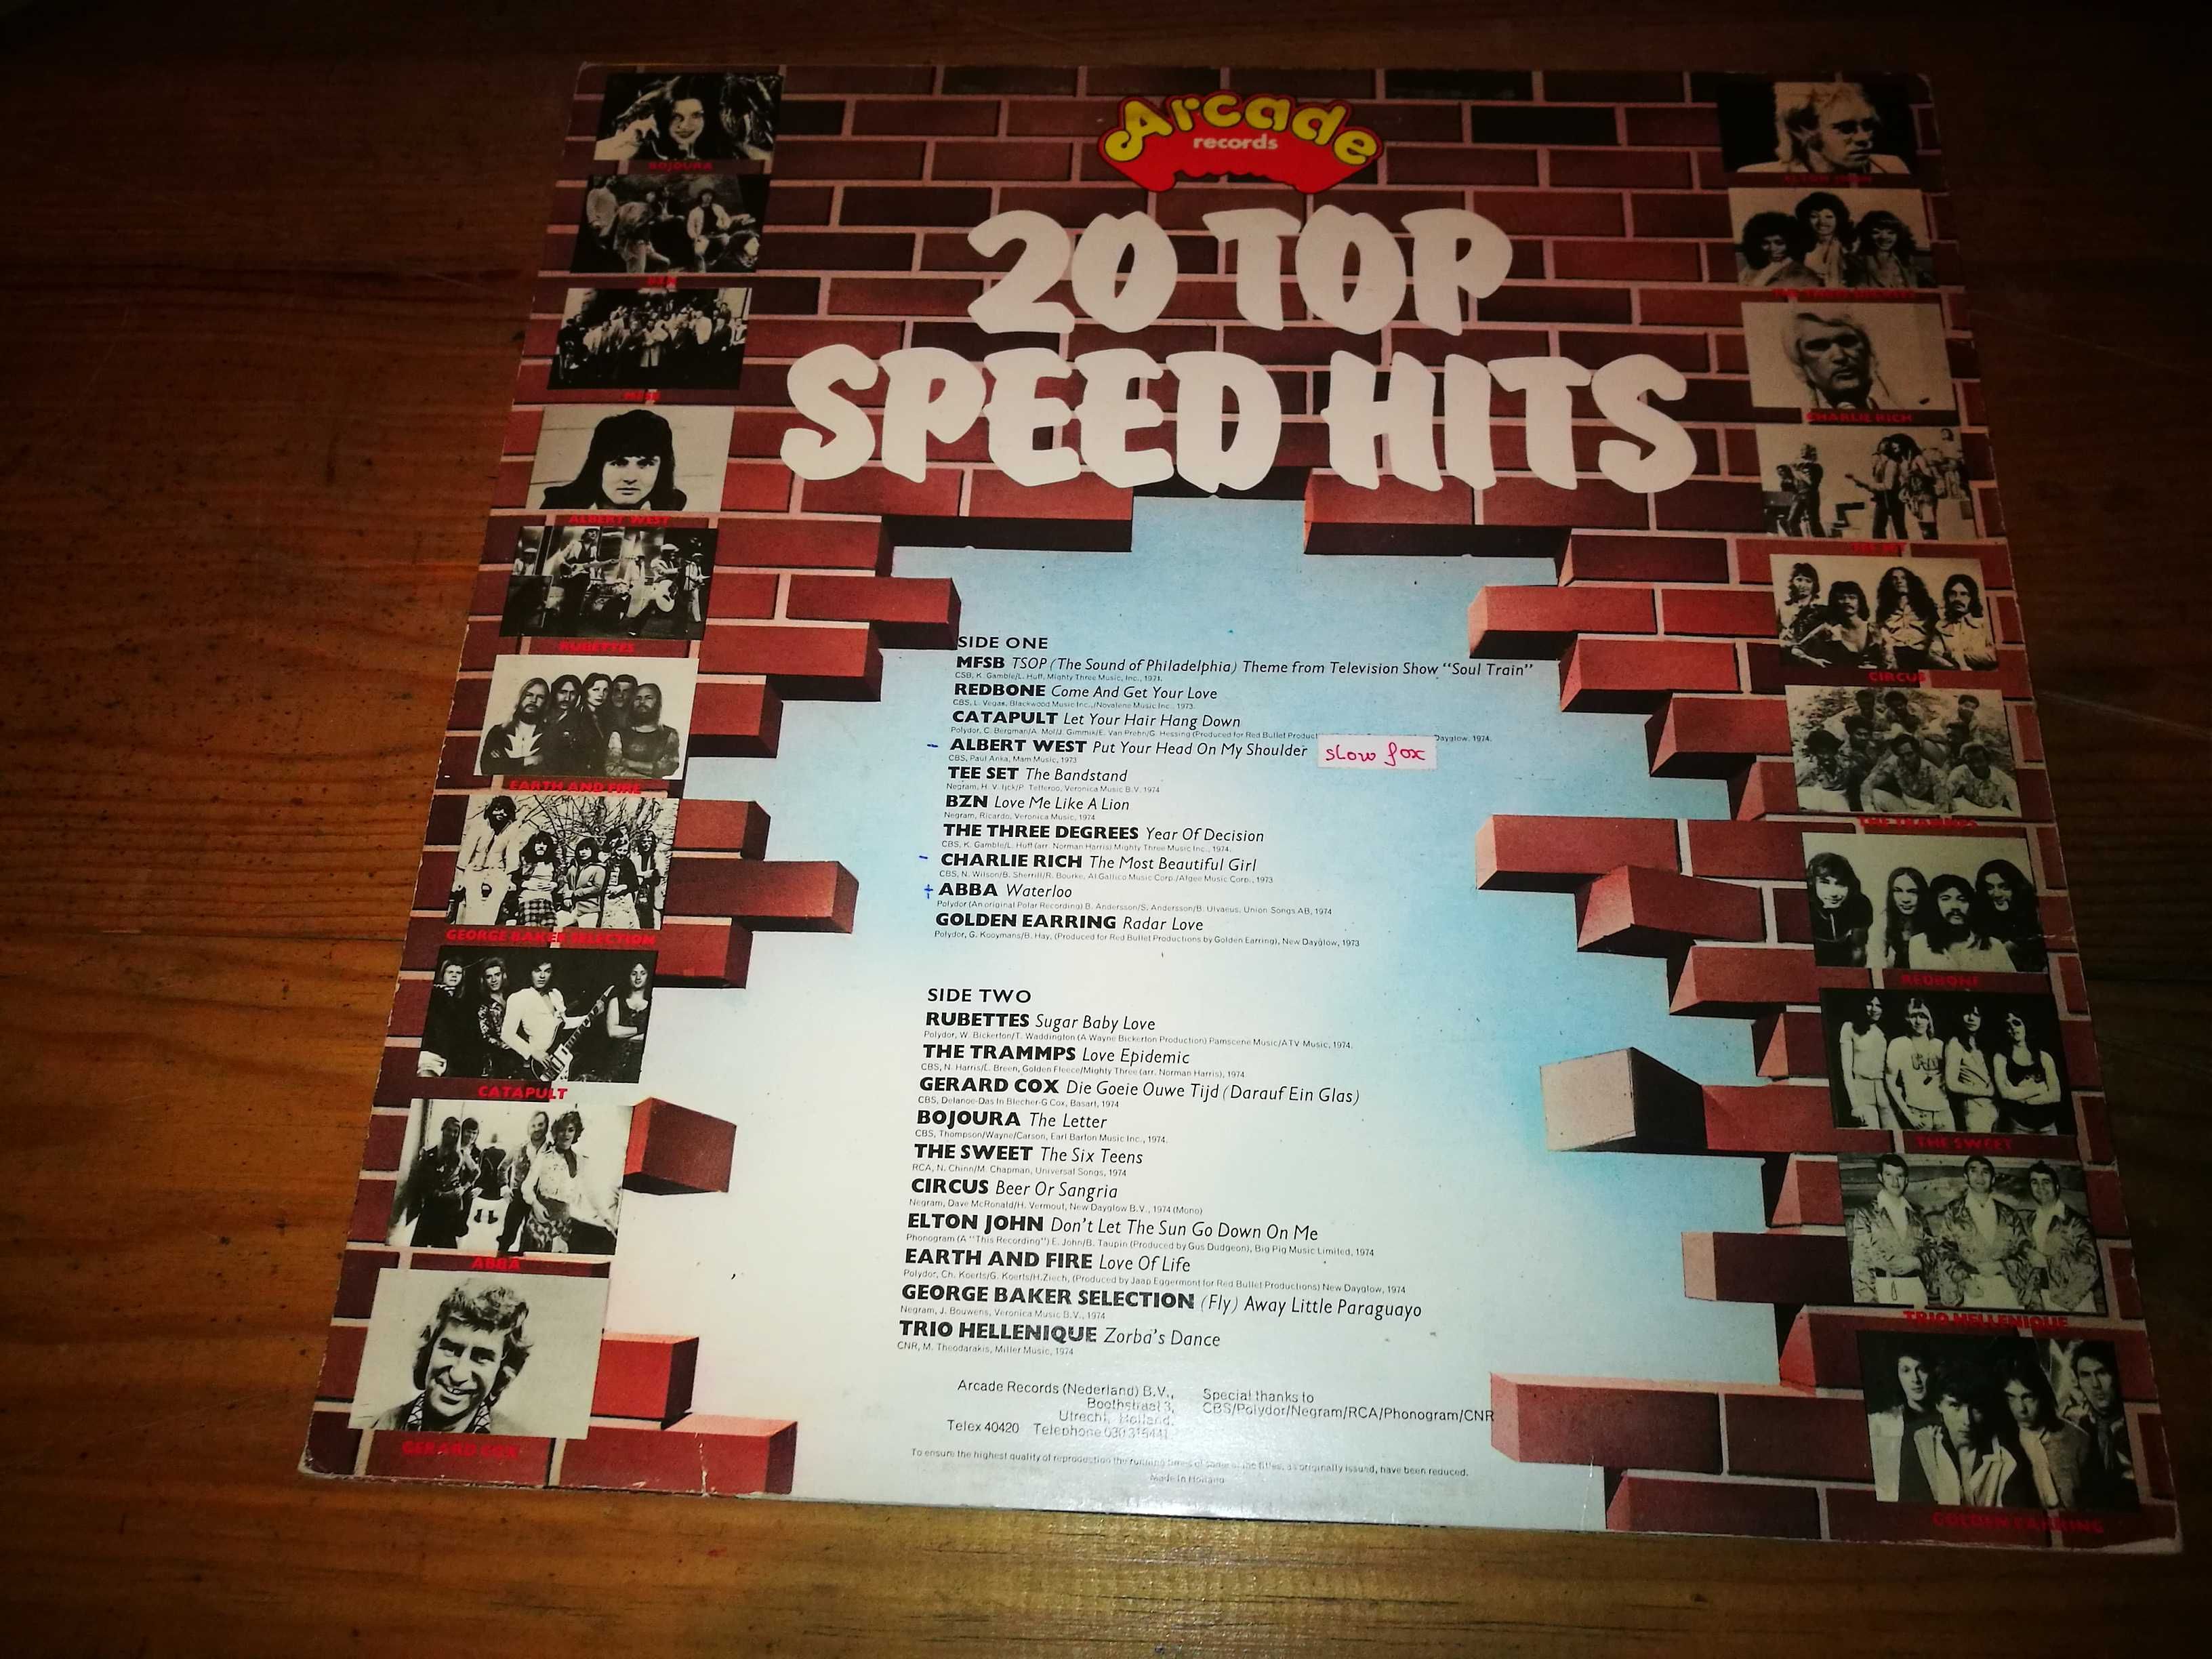 VARIOS  - 20 Top Speed hits (Rubbets, THE Sweet, Abba, Elton John) LP